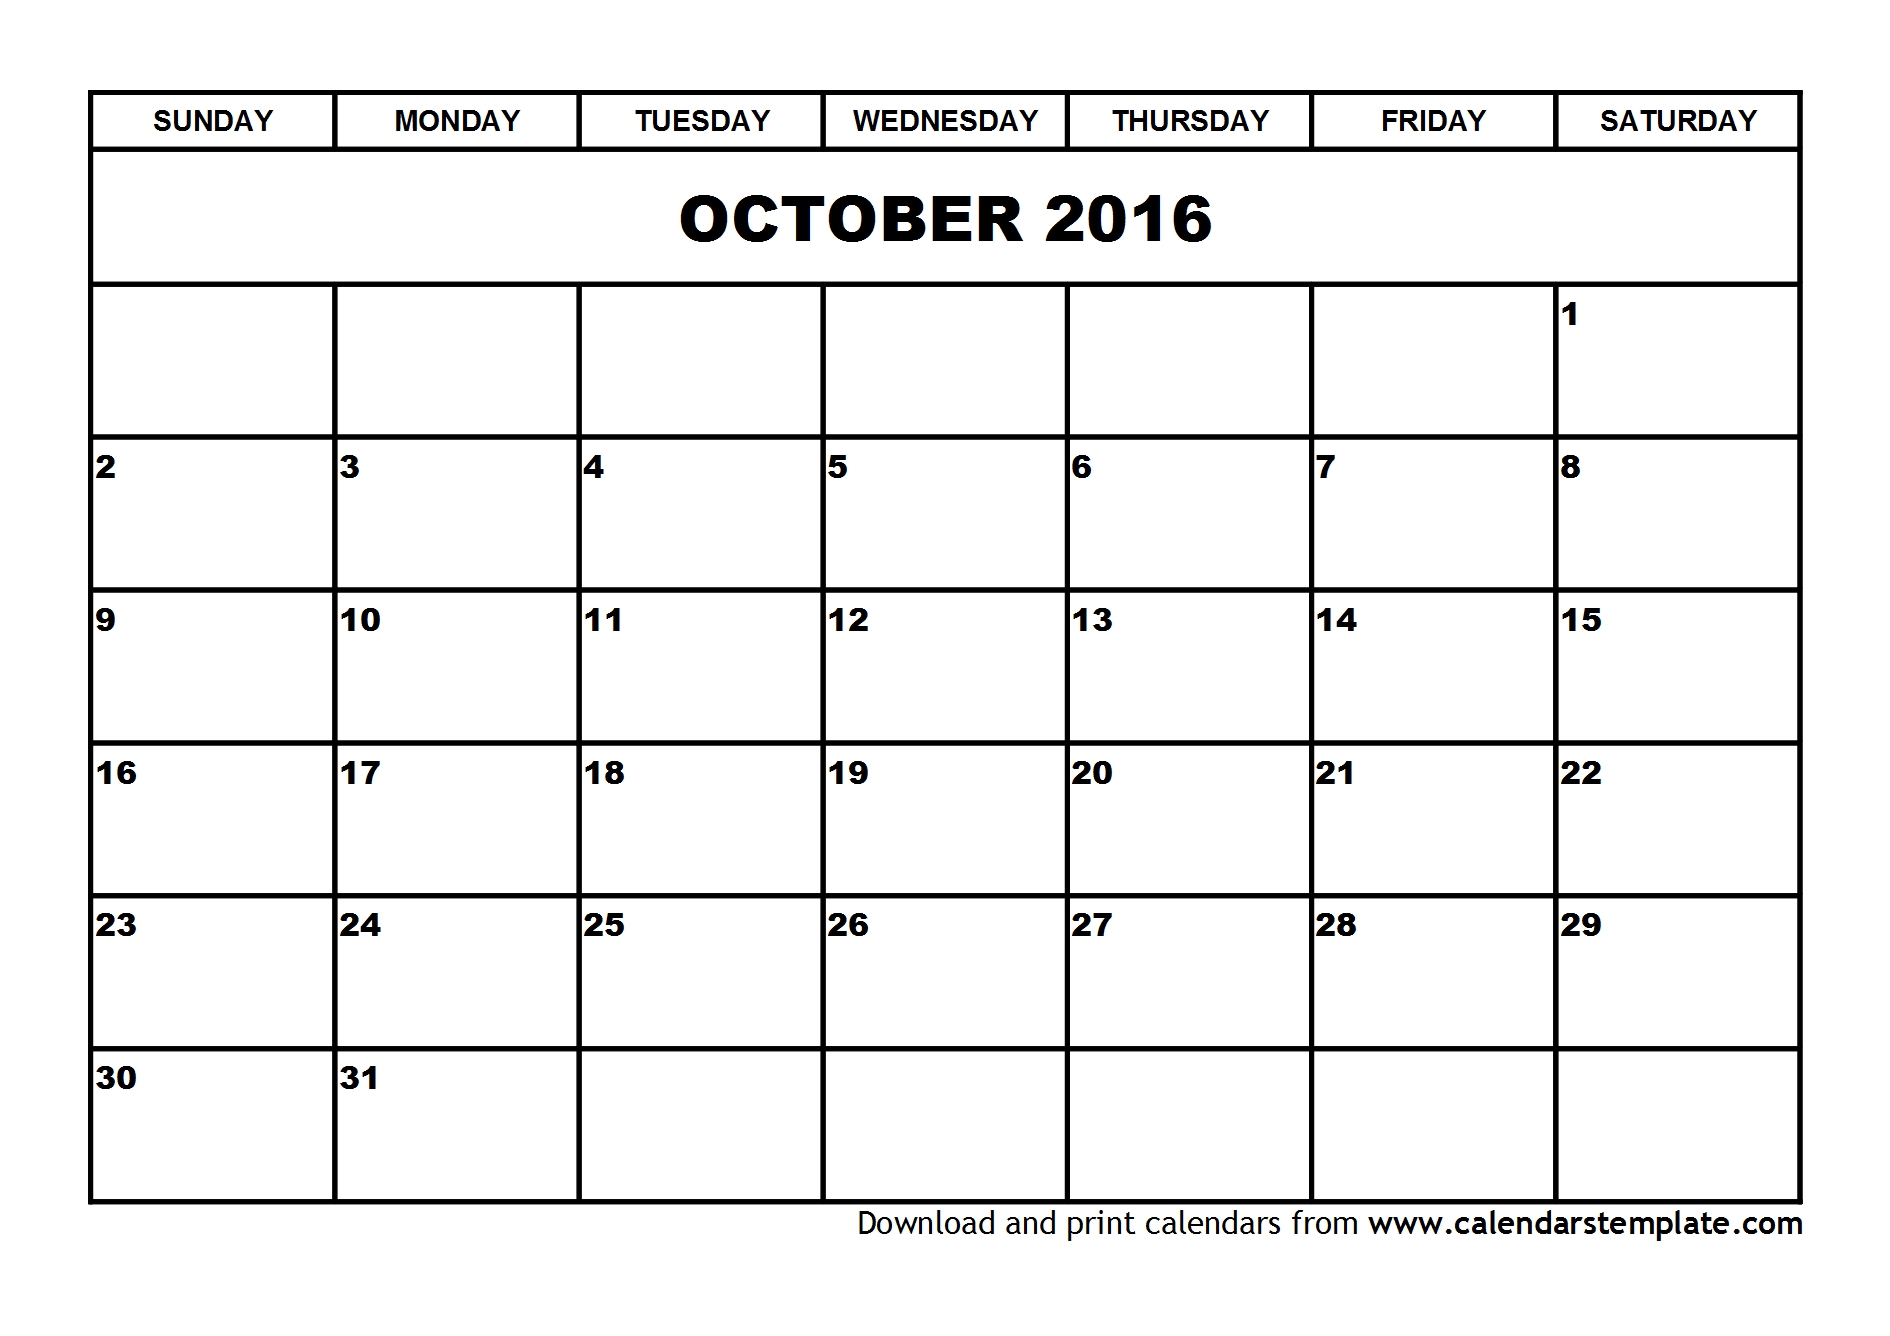 October 2016 Calendar Template | 2017 calendar with holidays